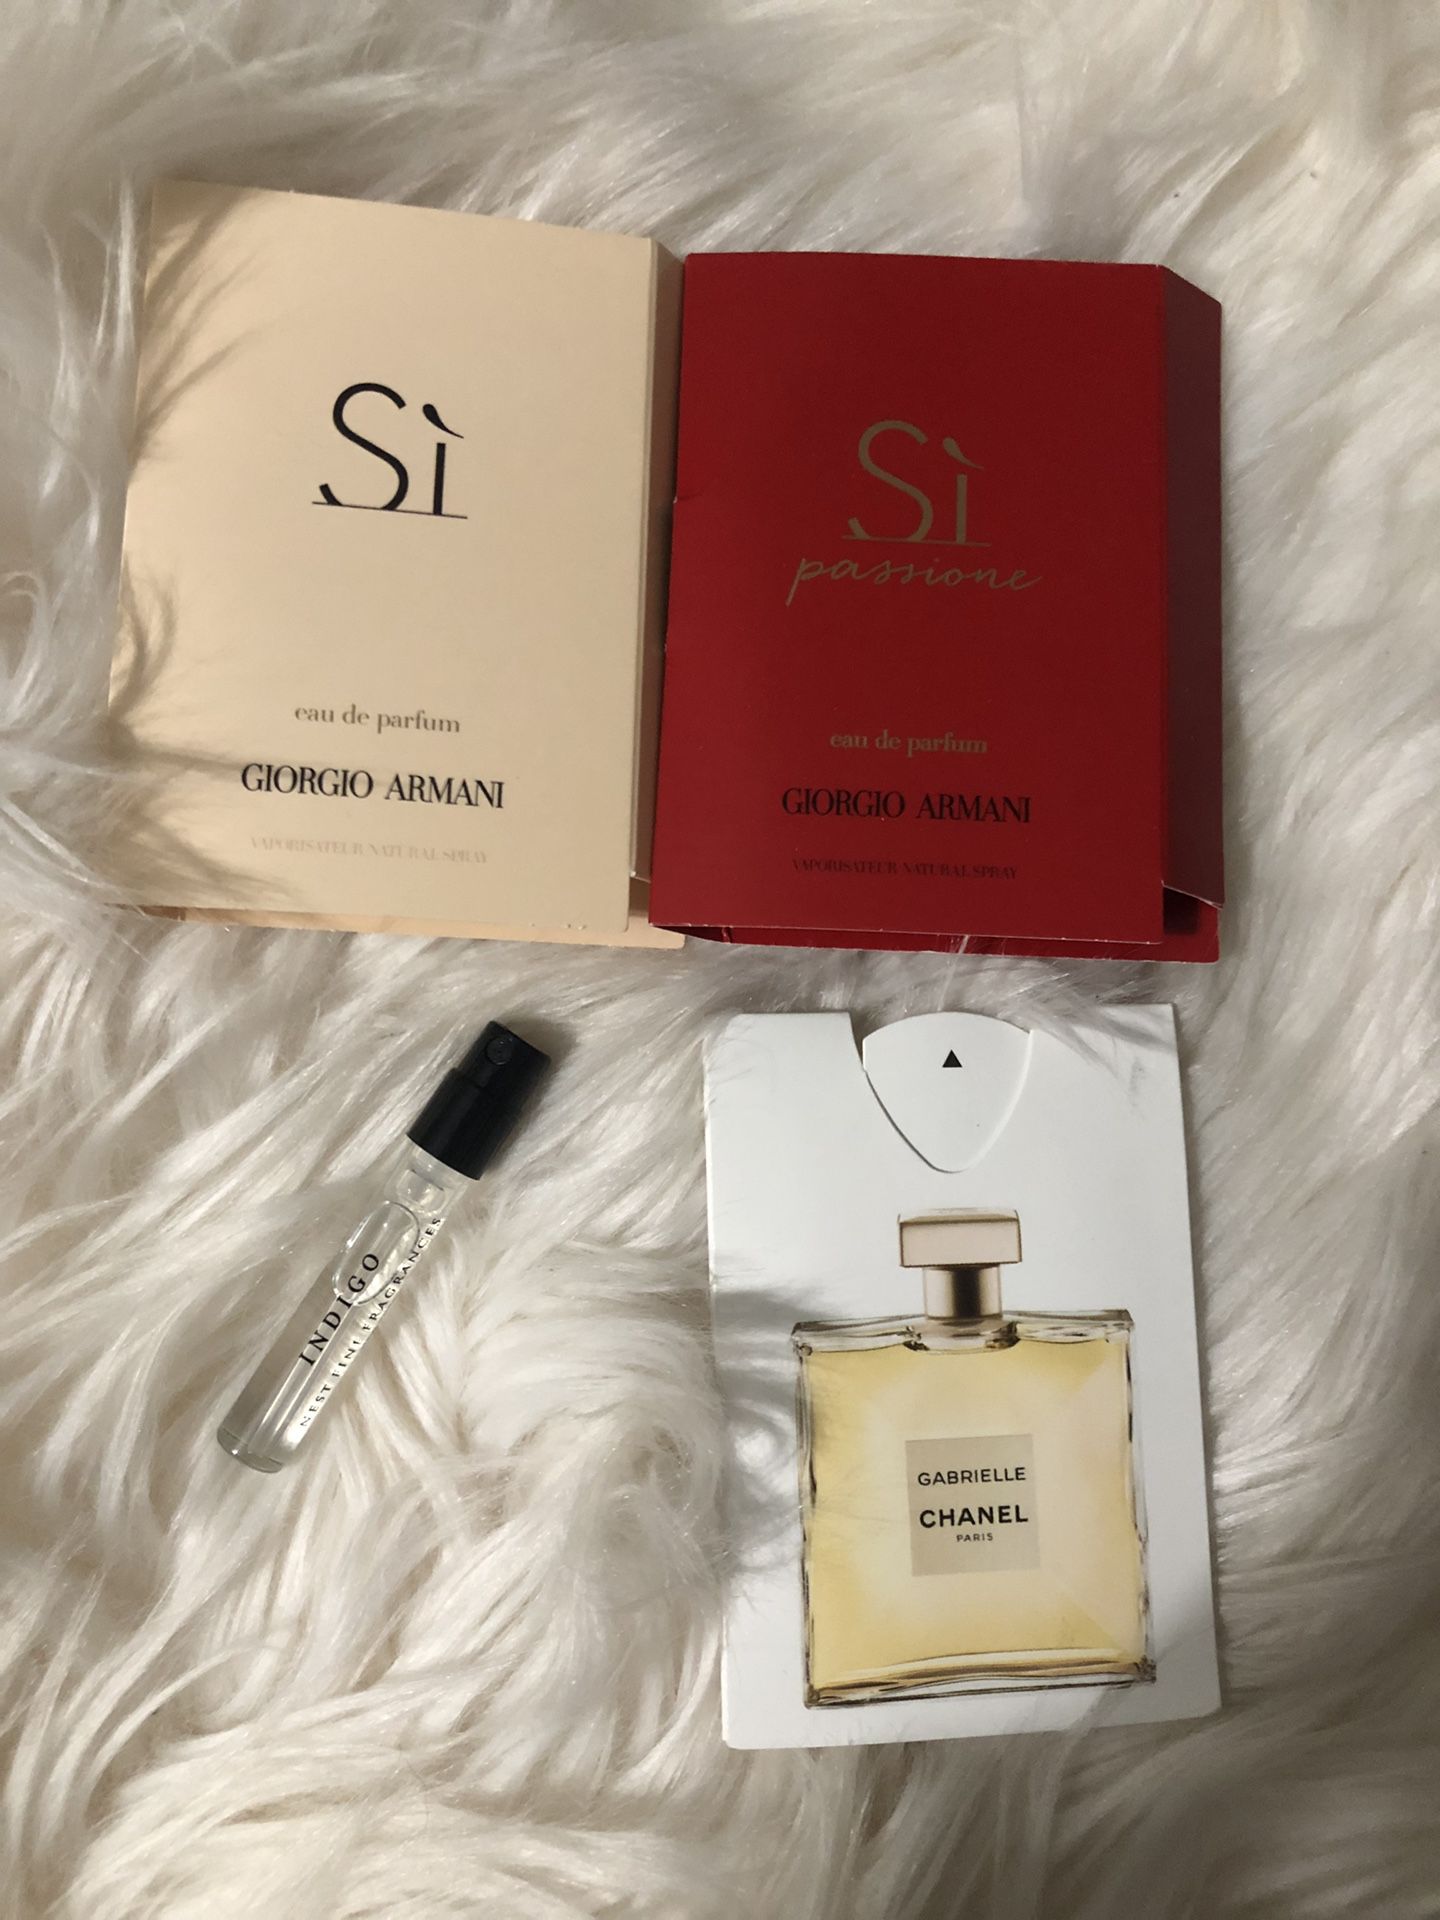 Women’s perfume samples